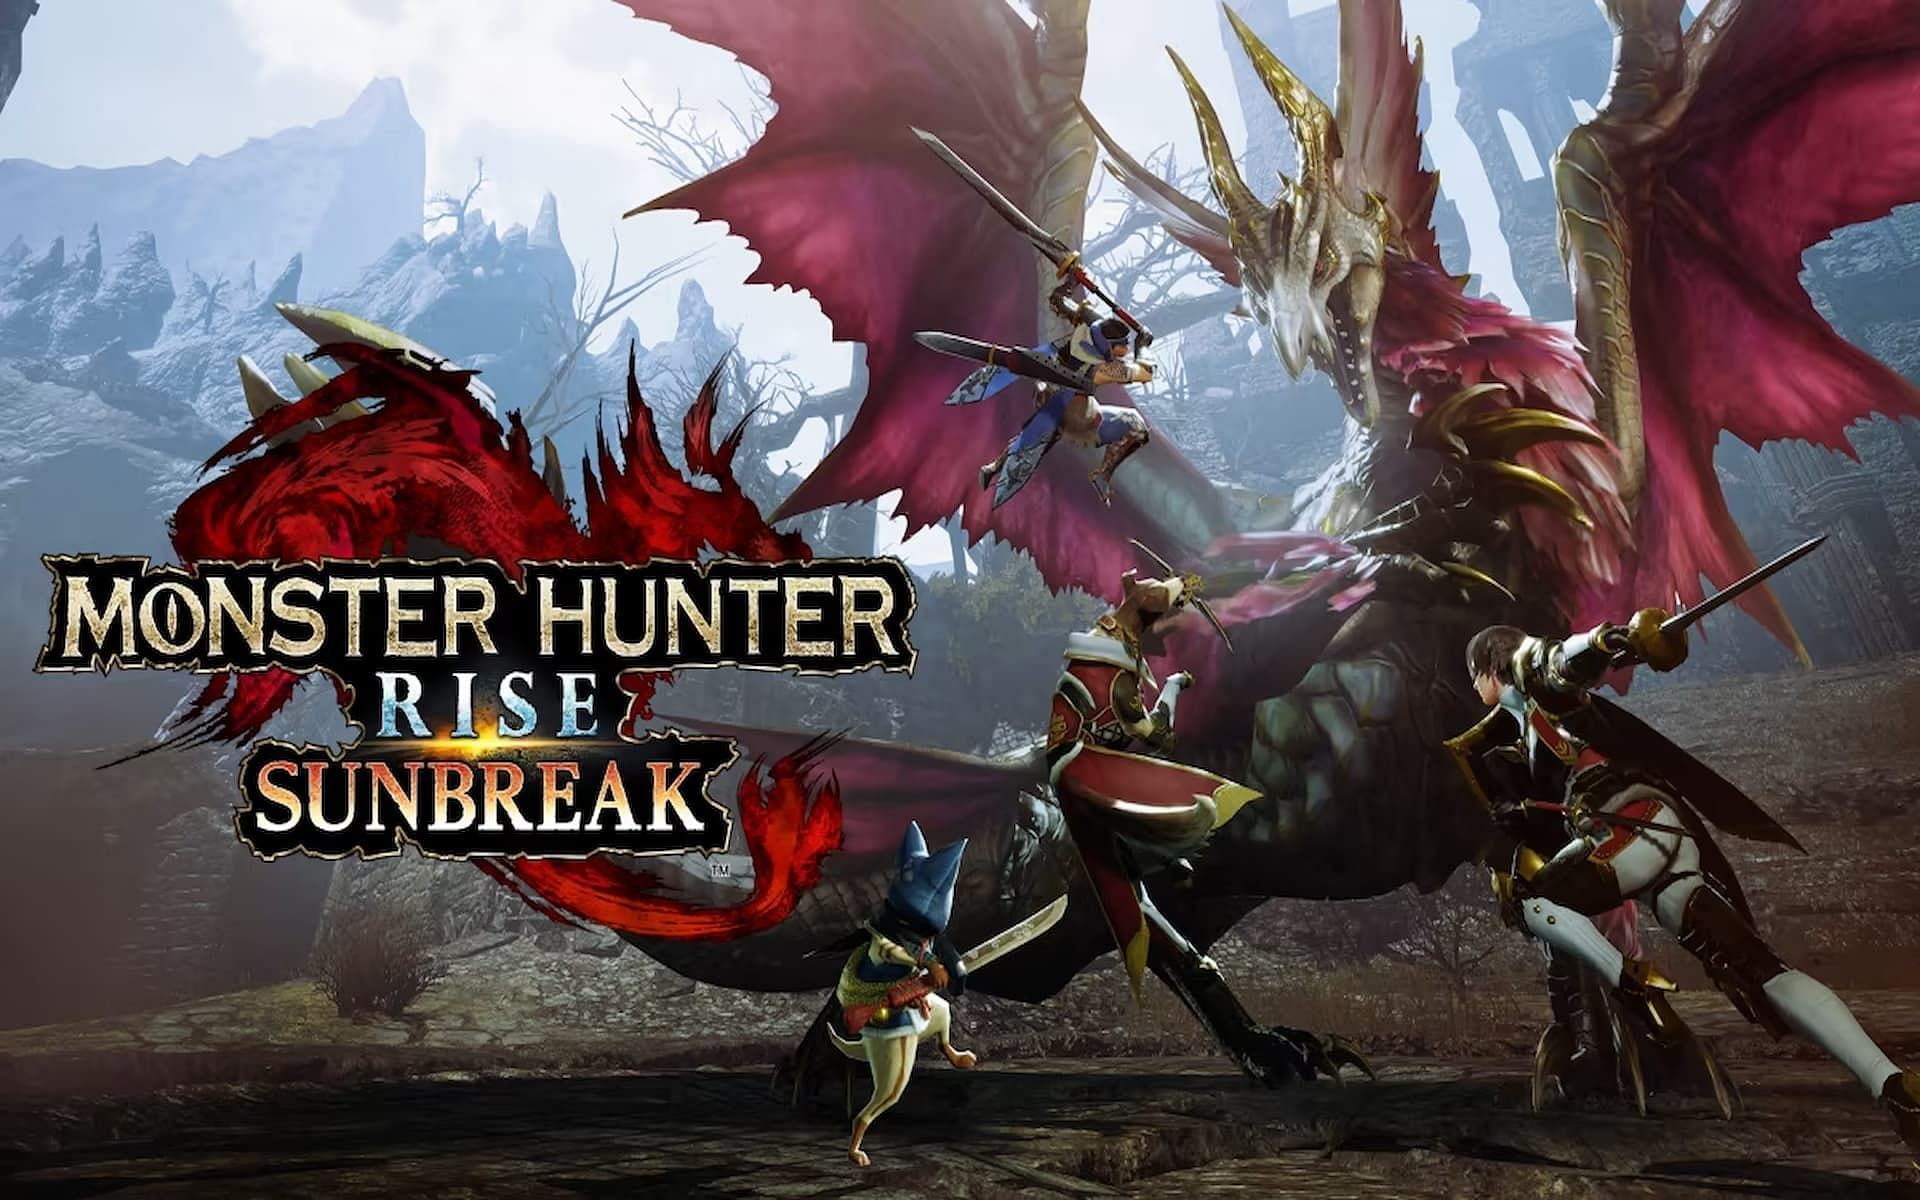 Monster Hunter Rise Sunbreak' - is there crossplay?